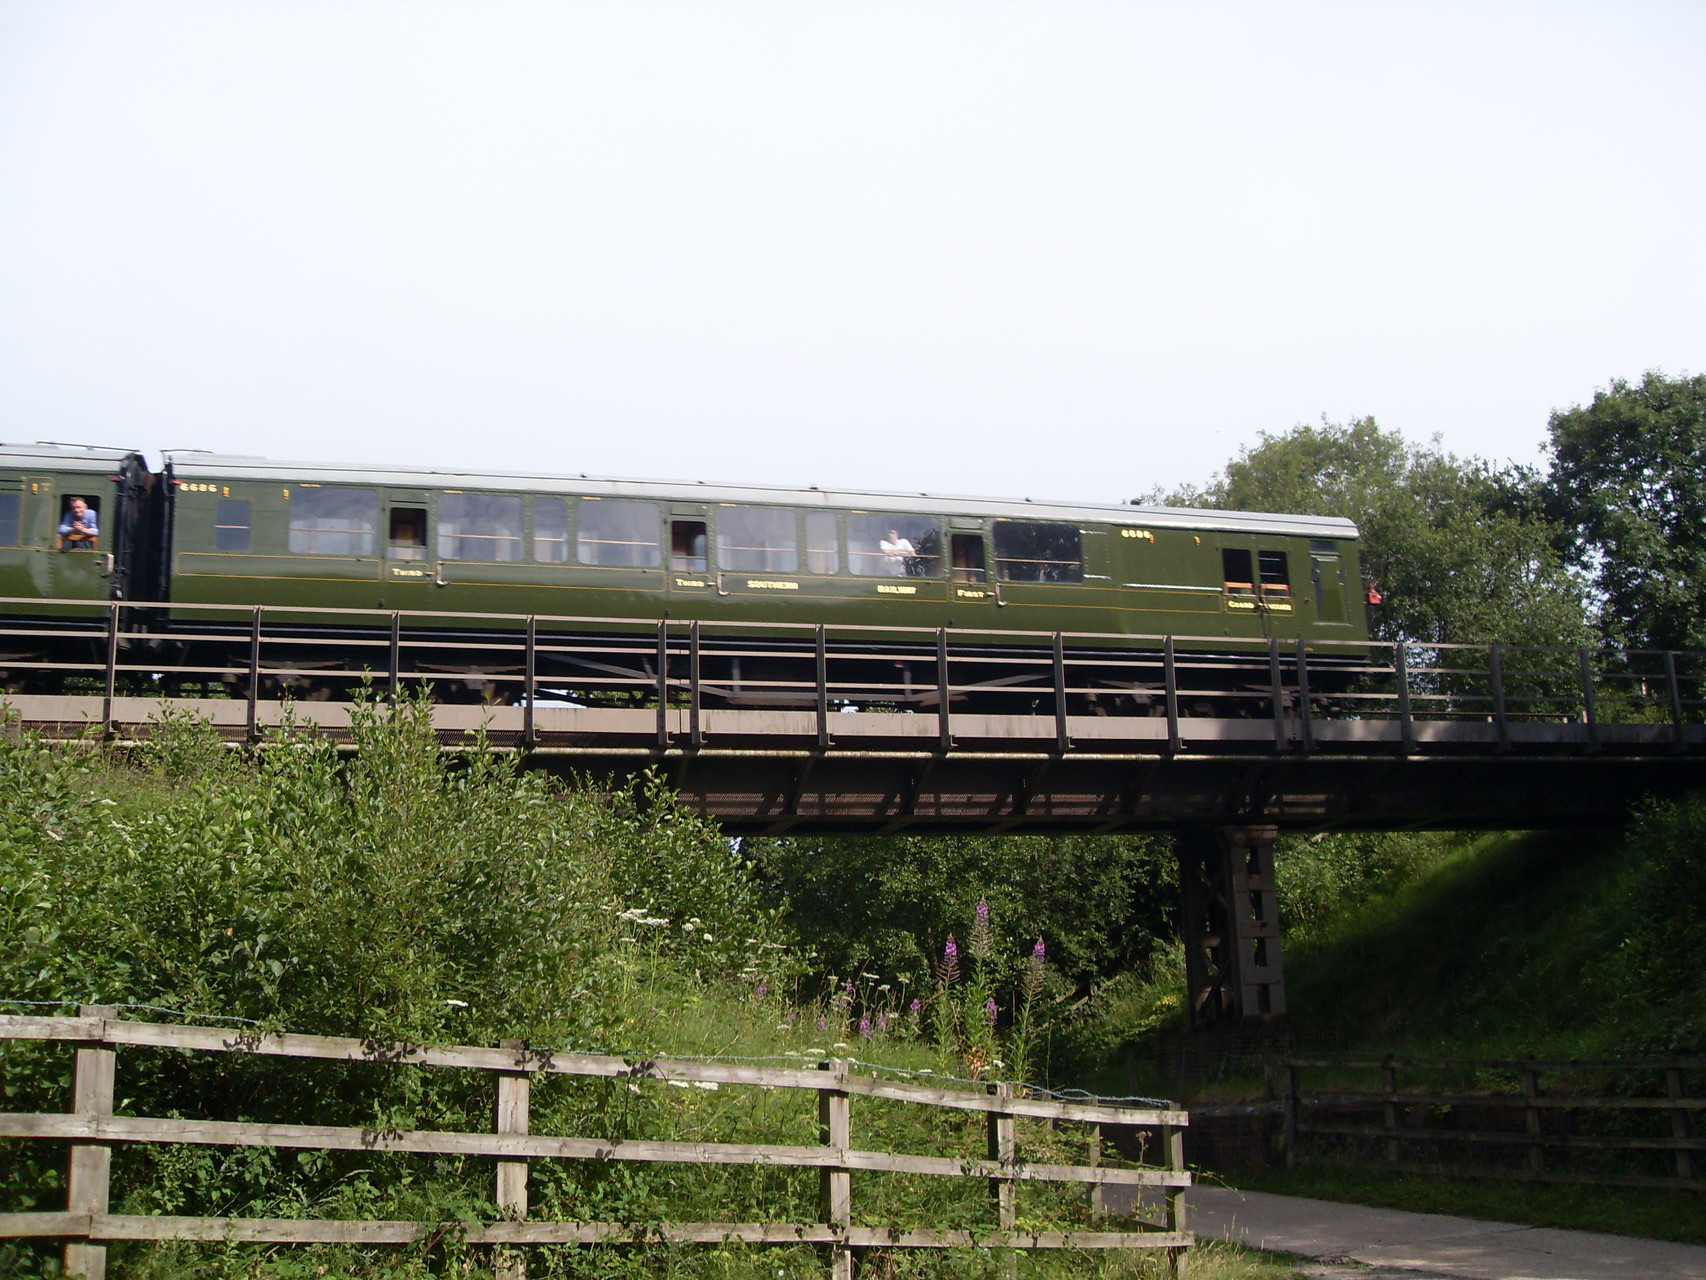 A lovely green steam train on a railway bridge